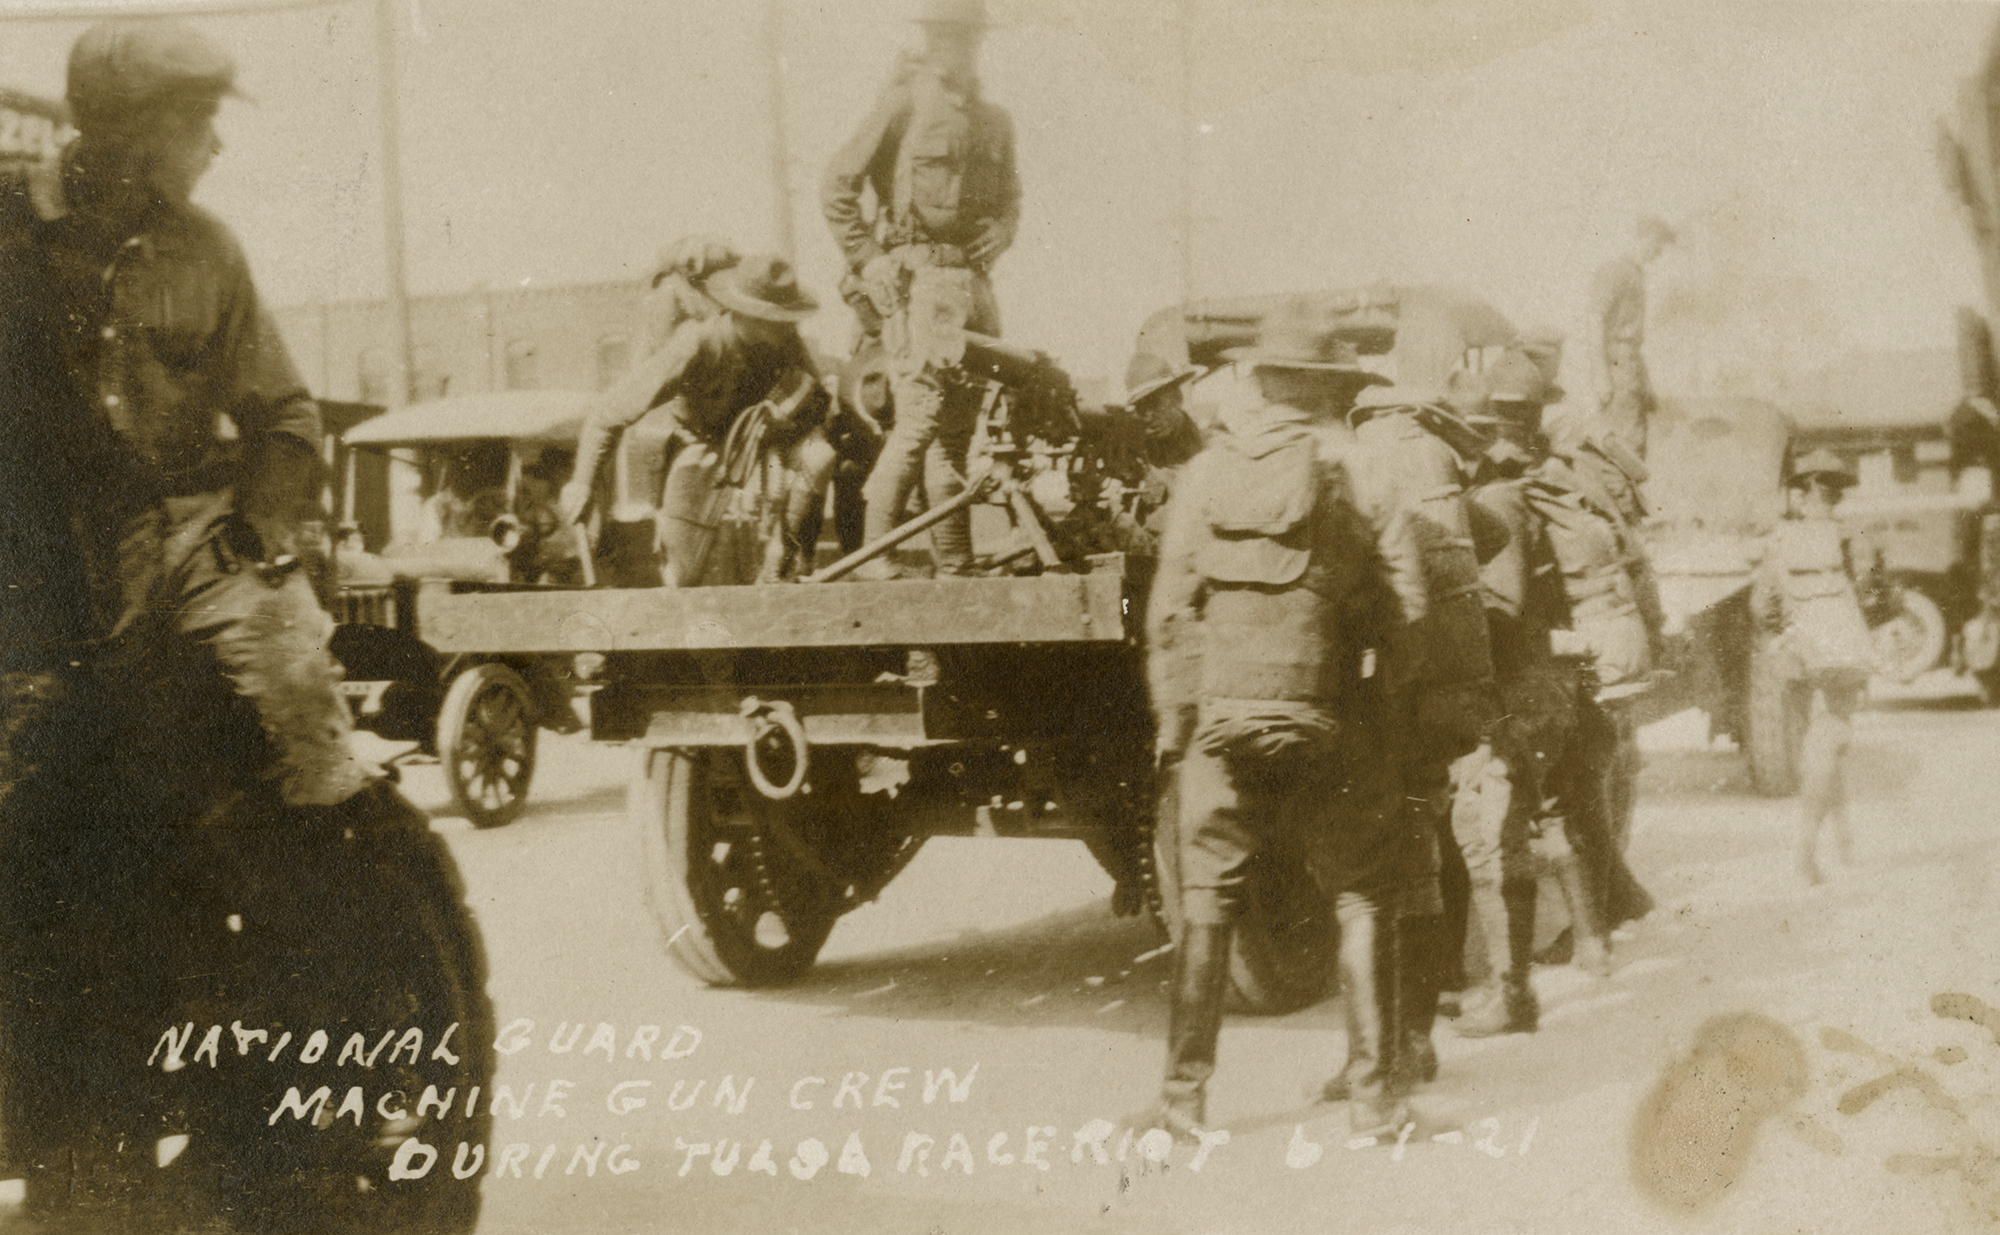 A National Guard machine gun crew during the Tulsa Race Massacre, June 1, 1921